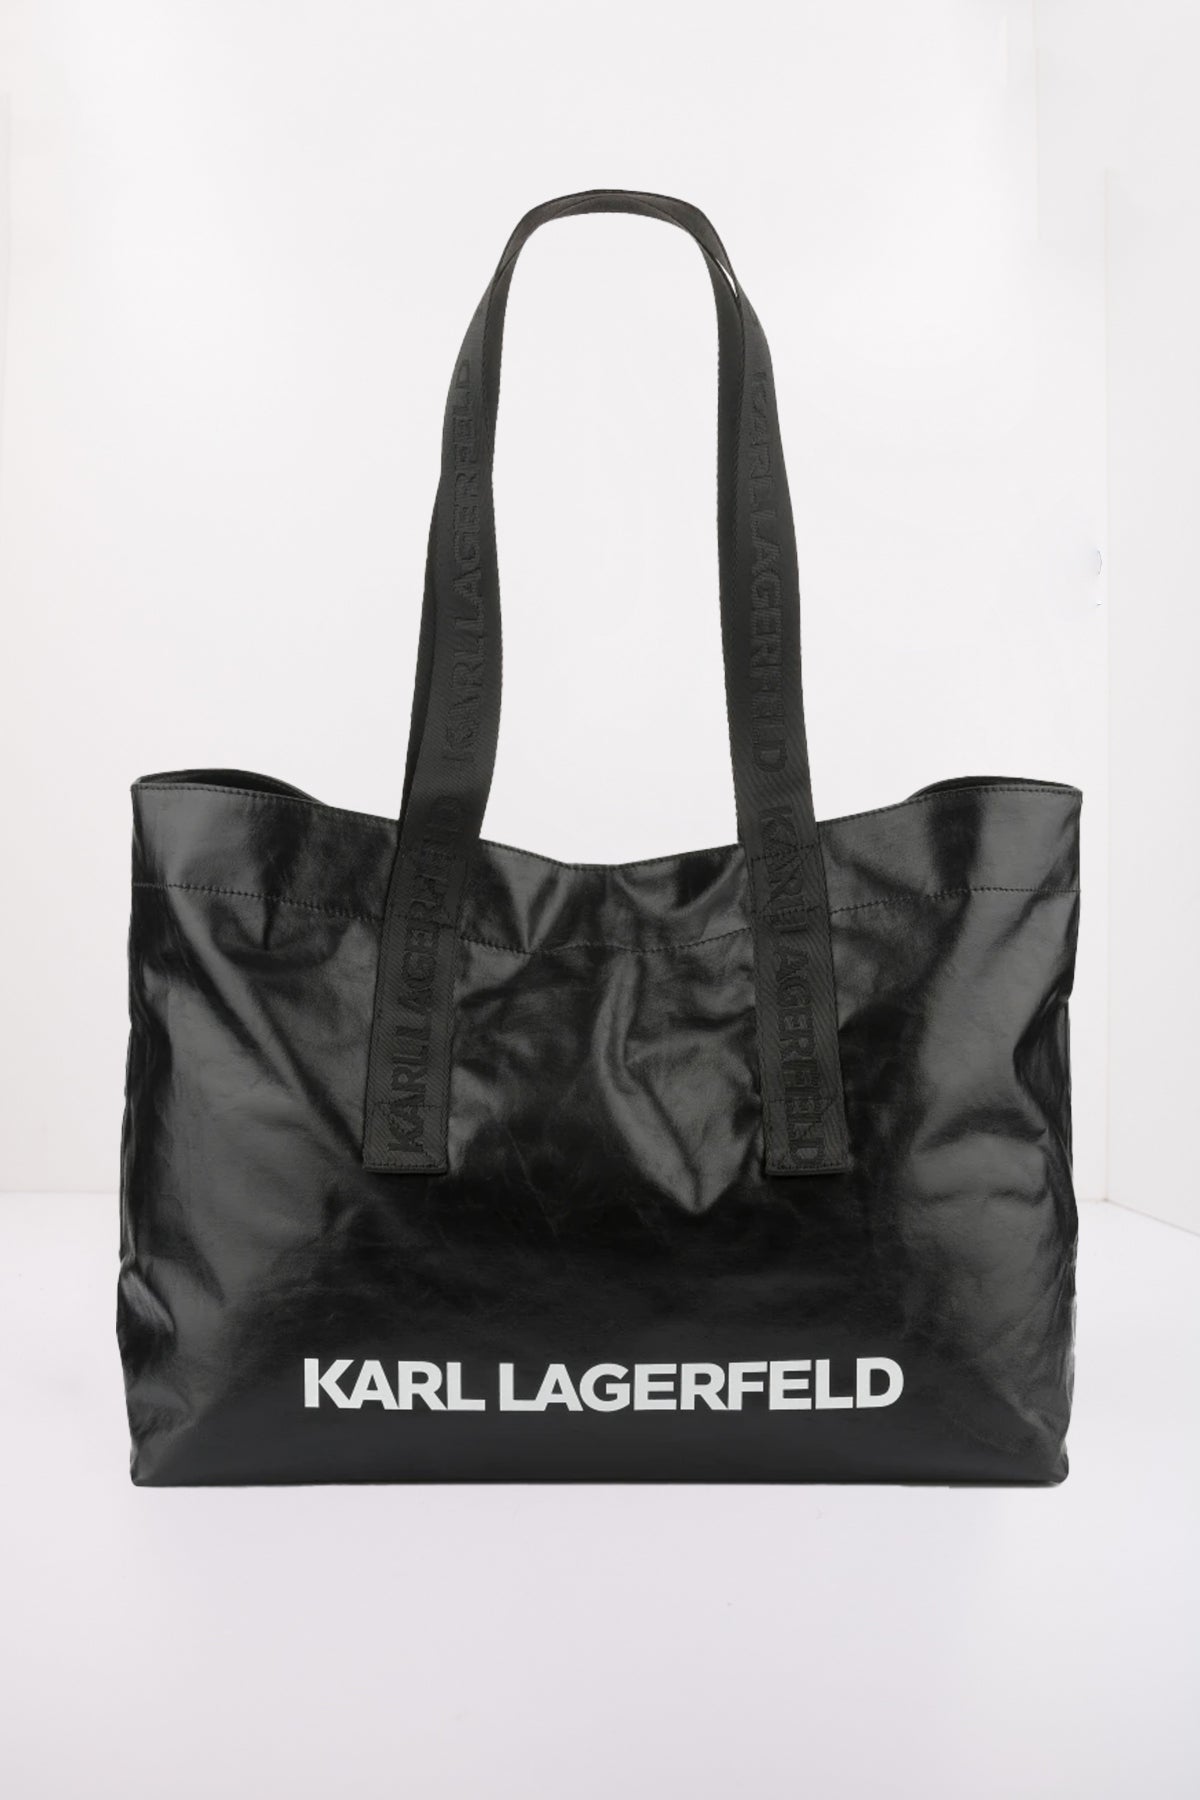 KARL LAGERFELD K/ESSENTIAL COATED SHOPPER en color NEGRO  (2)